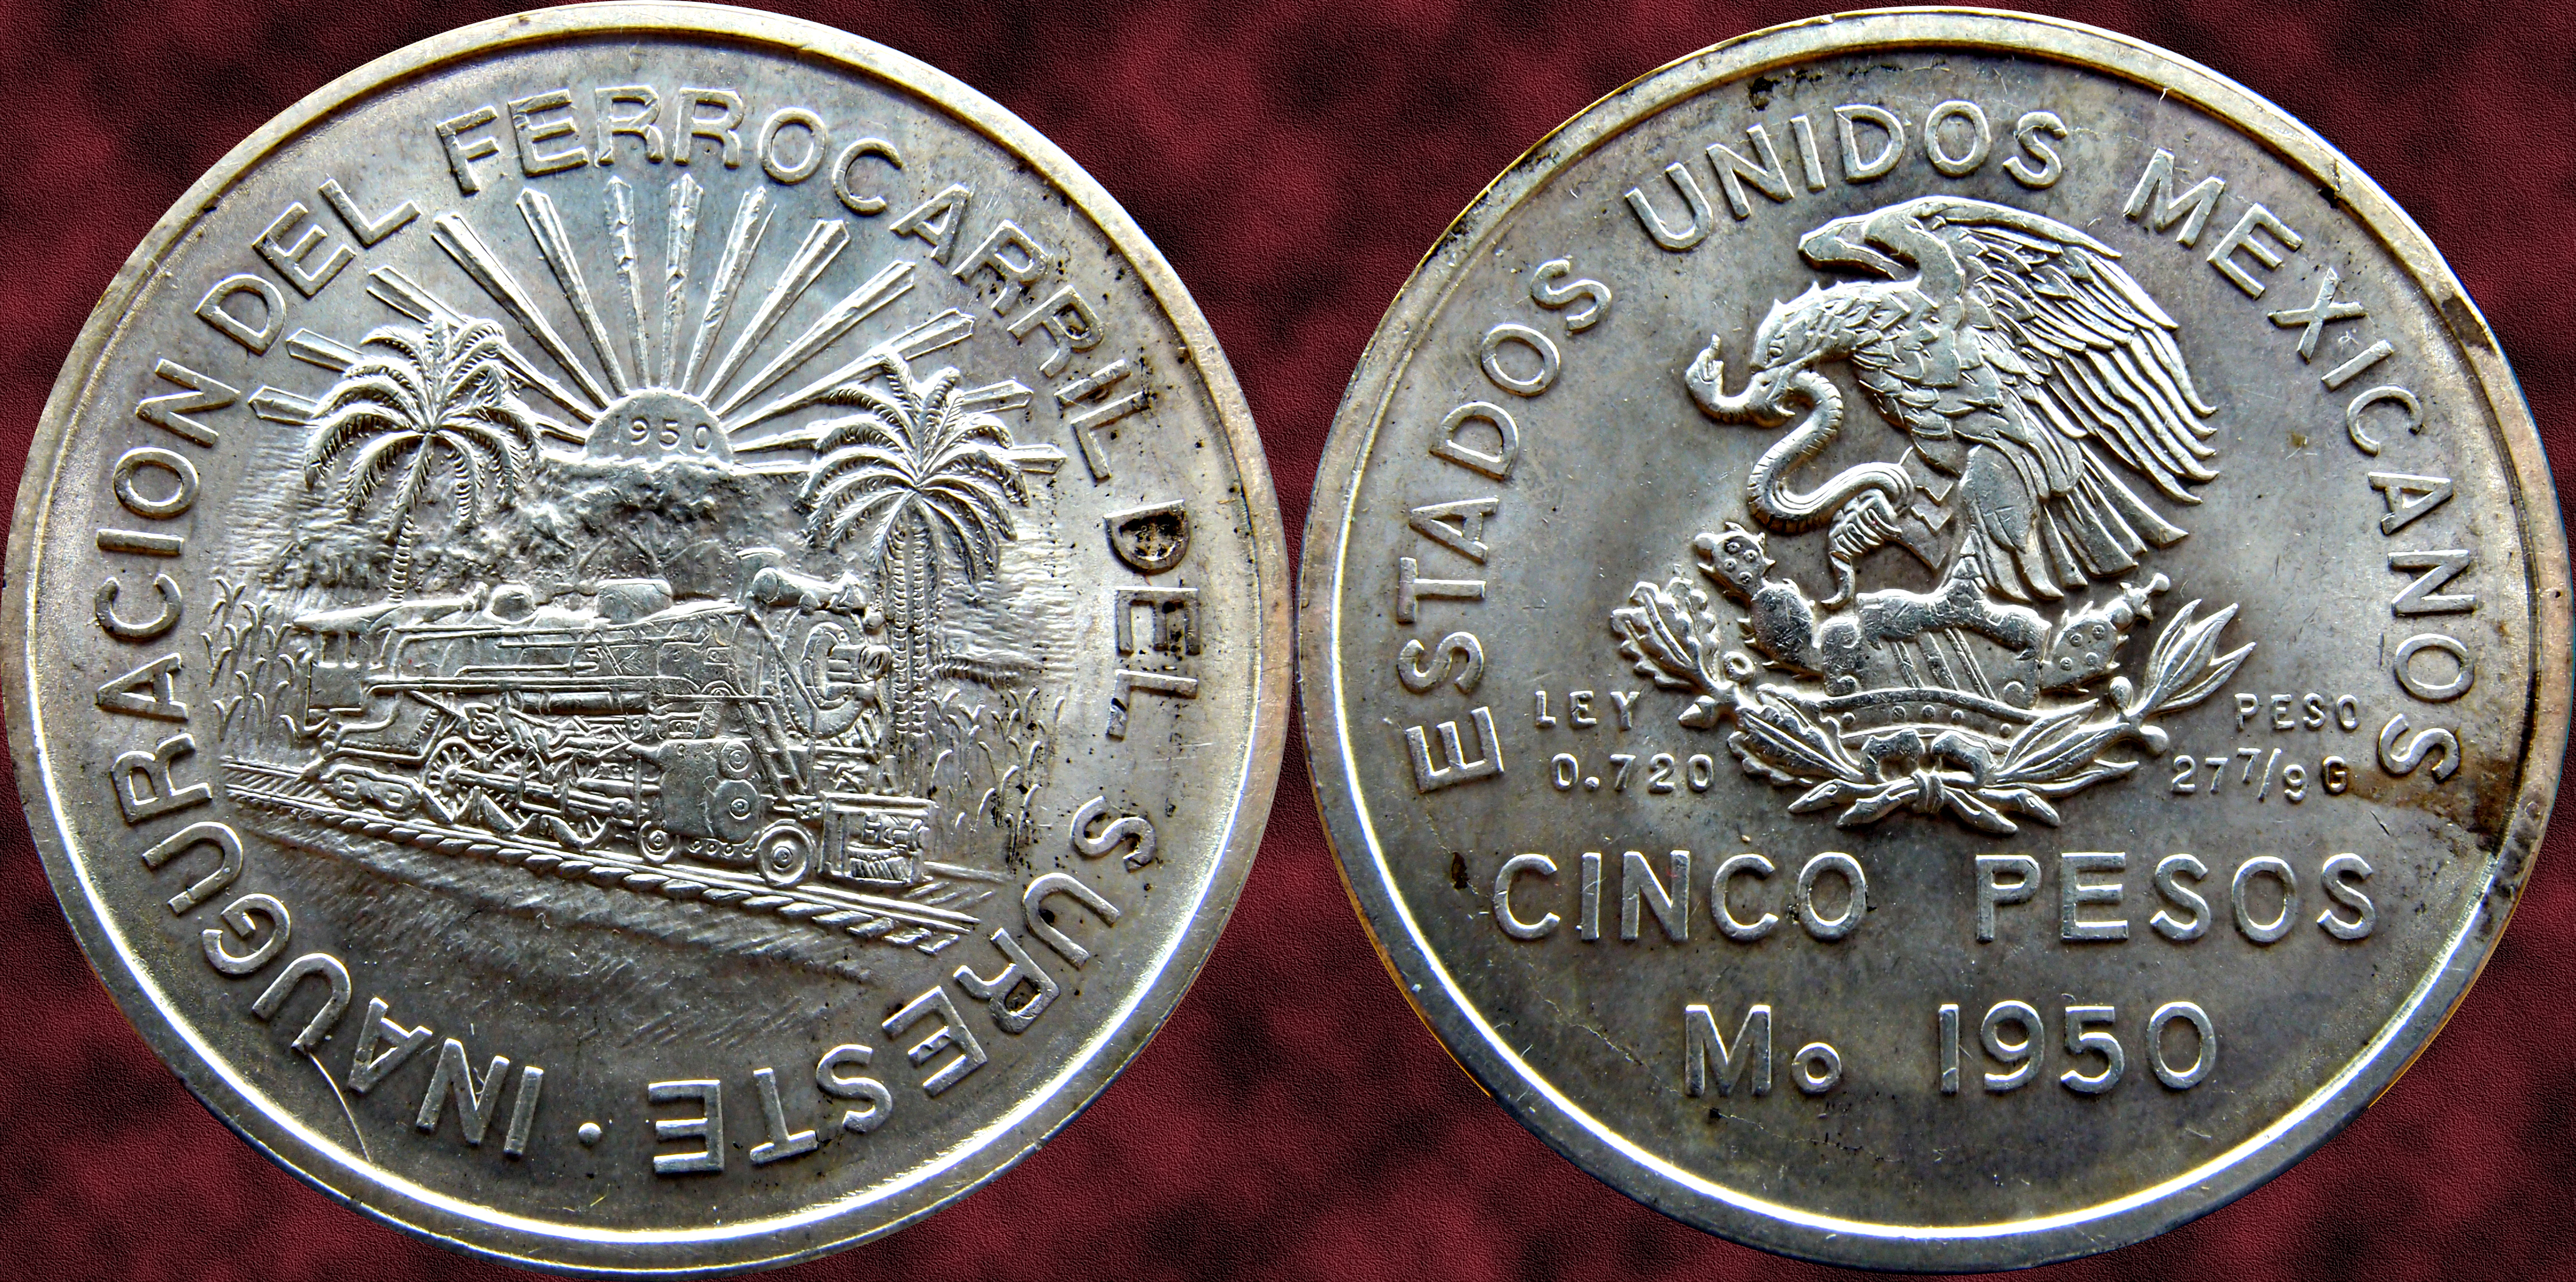 5 Pesos - Mexico 1950 - Inauguracion del Ferrocarril del Sureste 13559281393_0b0b98fe8b_o